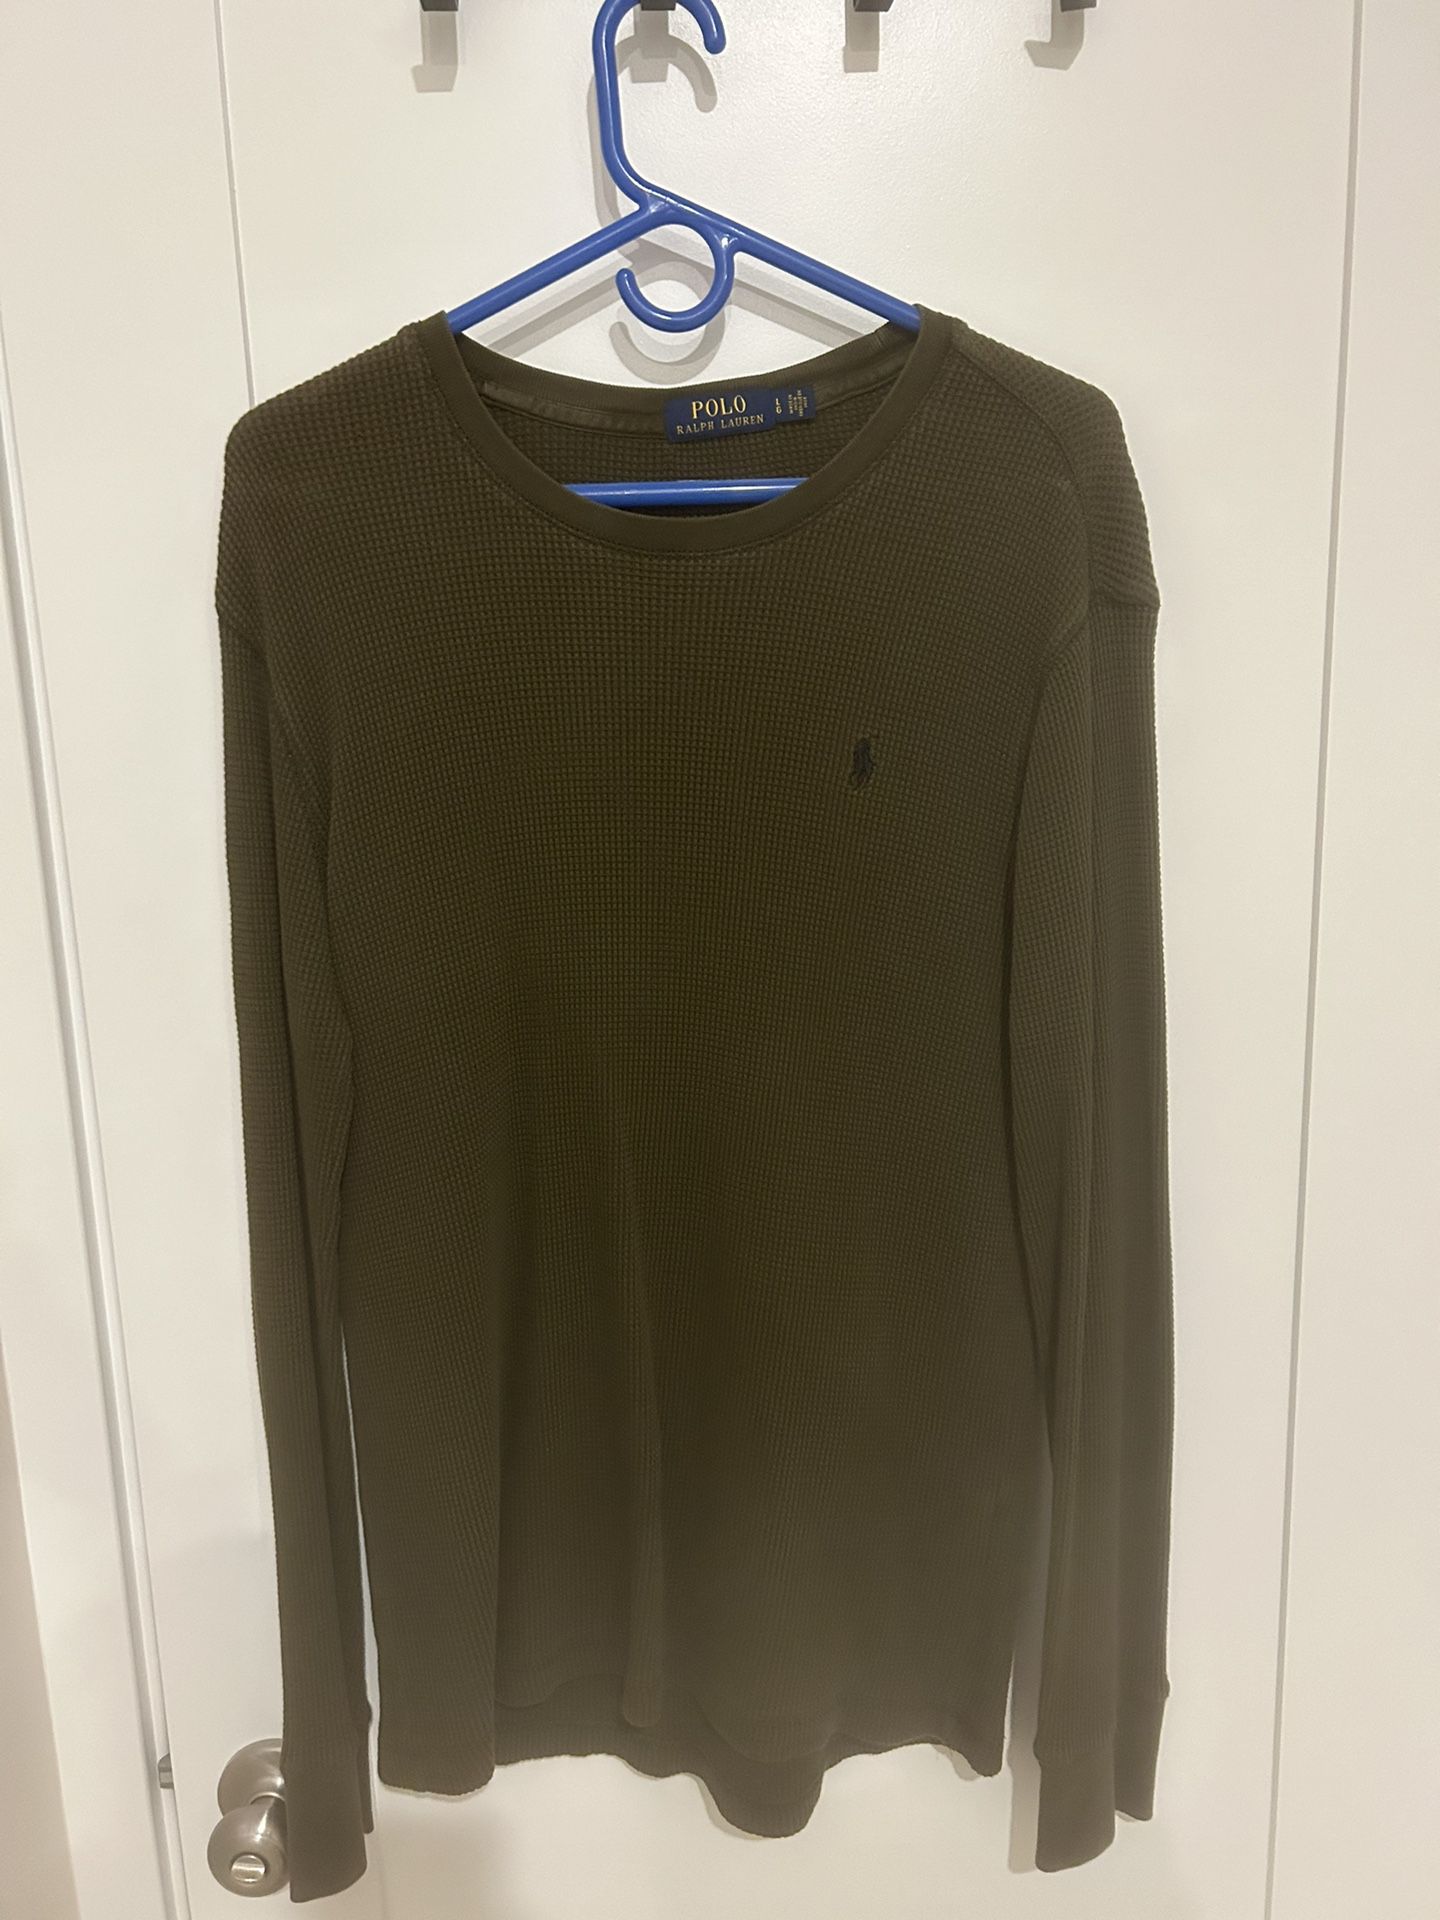 Men’s Polo Long Sleeve Shirt Sz Large